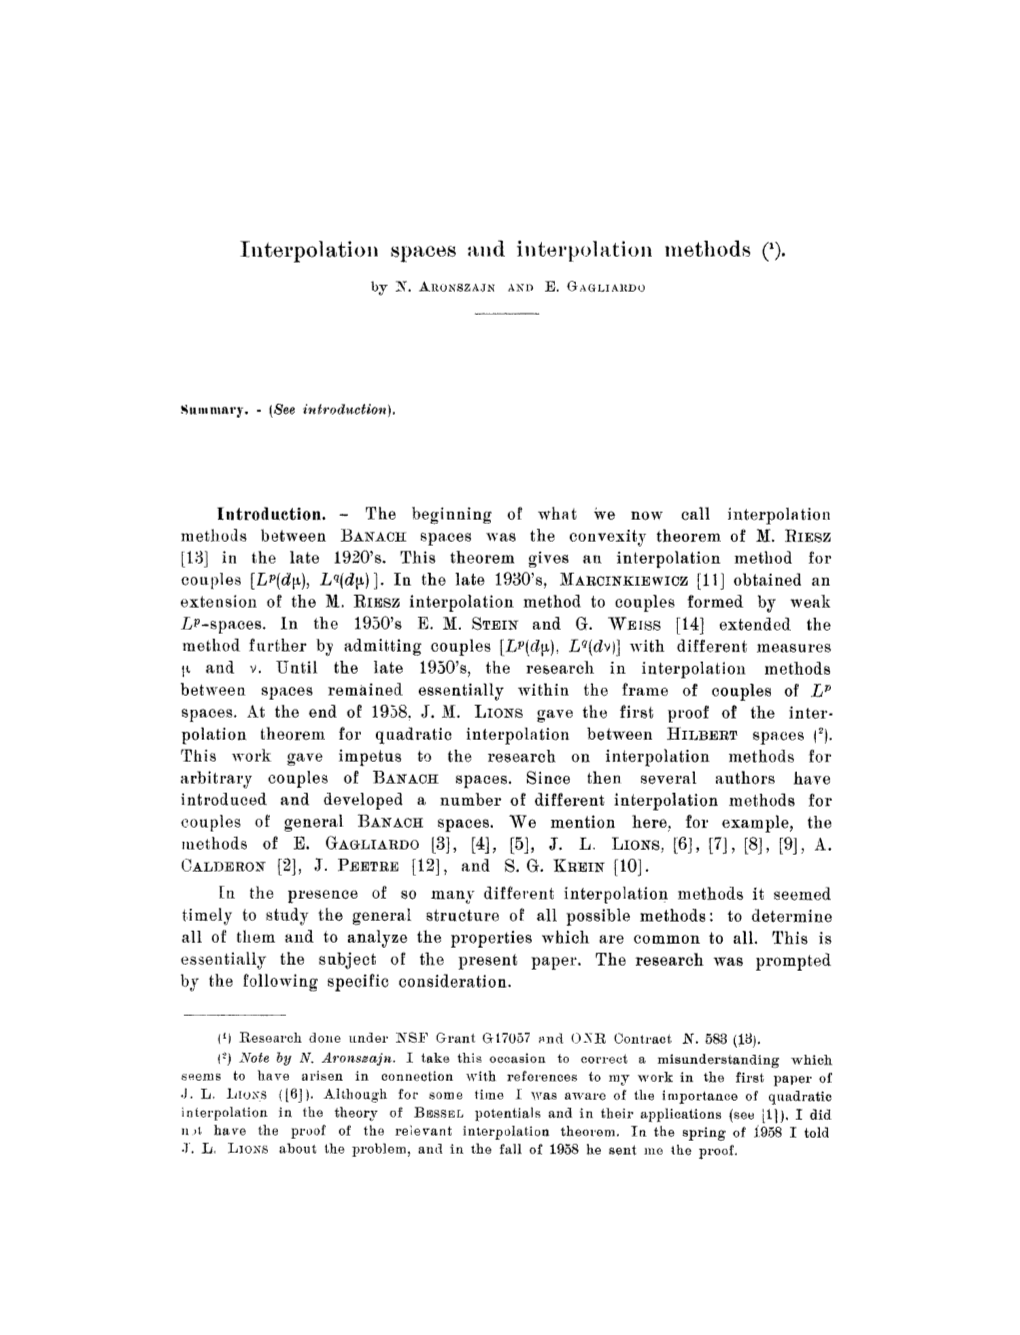 Interpolation Spaces and Interpolation Methods